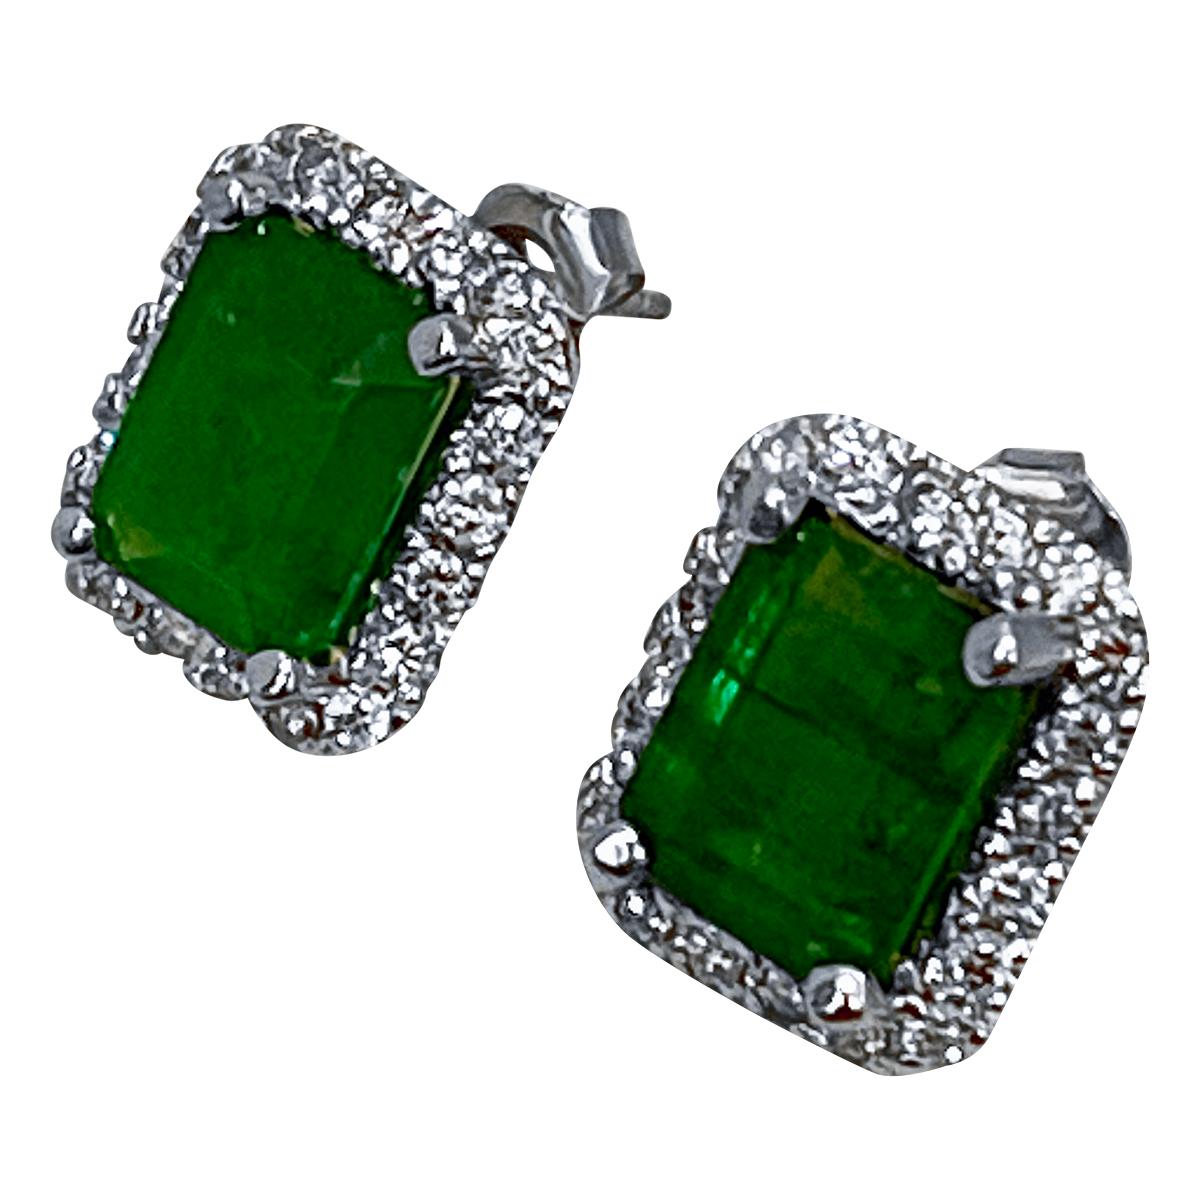 7 Carat Emerald Cut Emerald & 1.5 Ct Diamond Stud Earrings 14 Kt White Gold 1